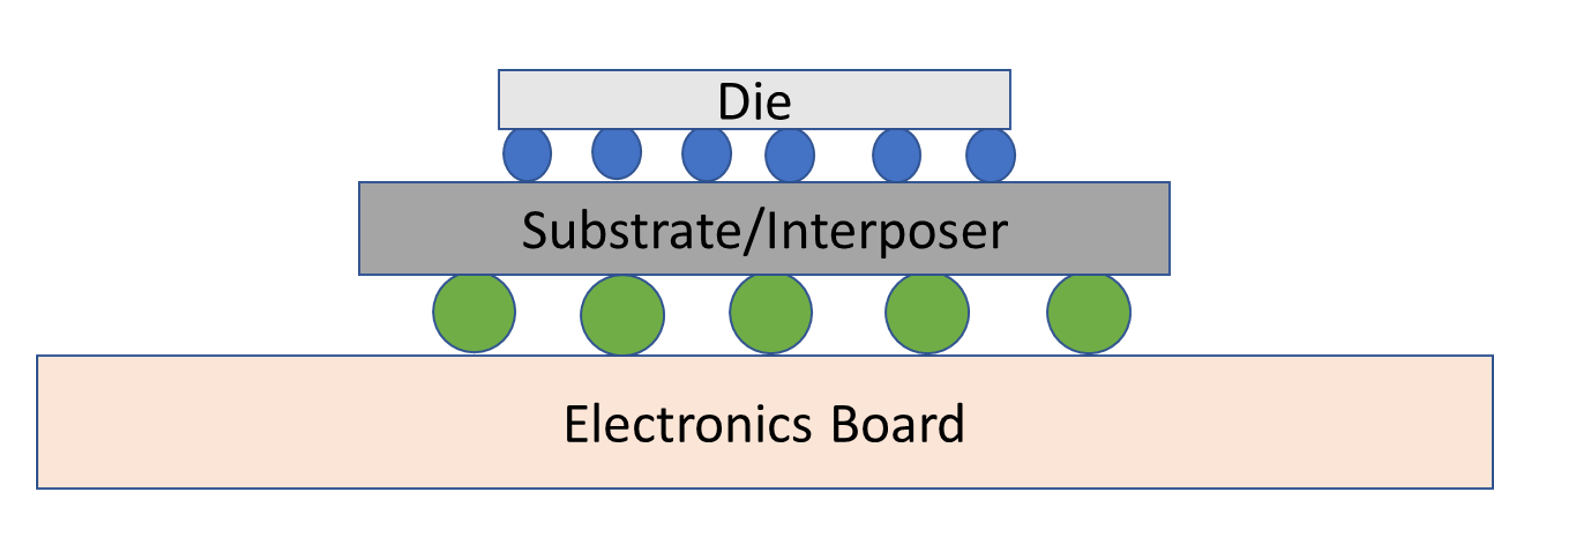 Slika 4: Konceptualni diagram embalaže flip-chip. Vir: A. Meixner/Semiconductor Engineering